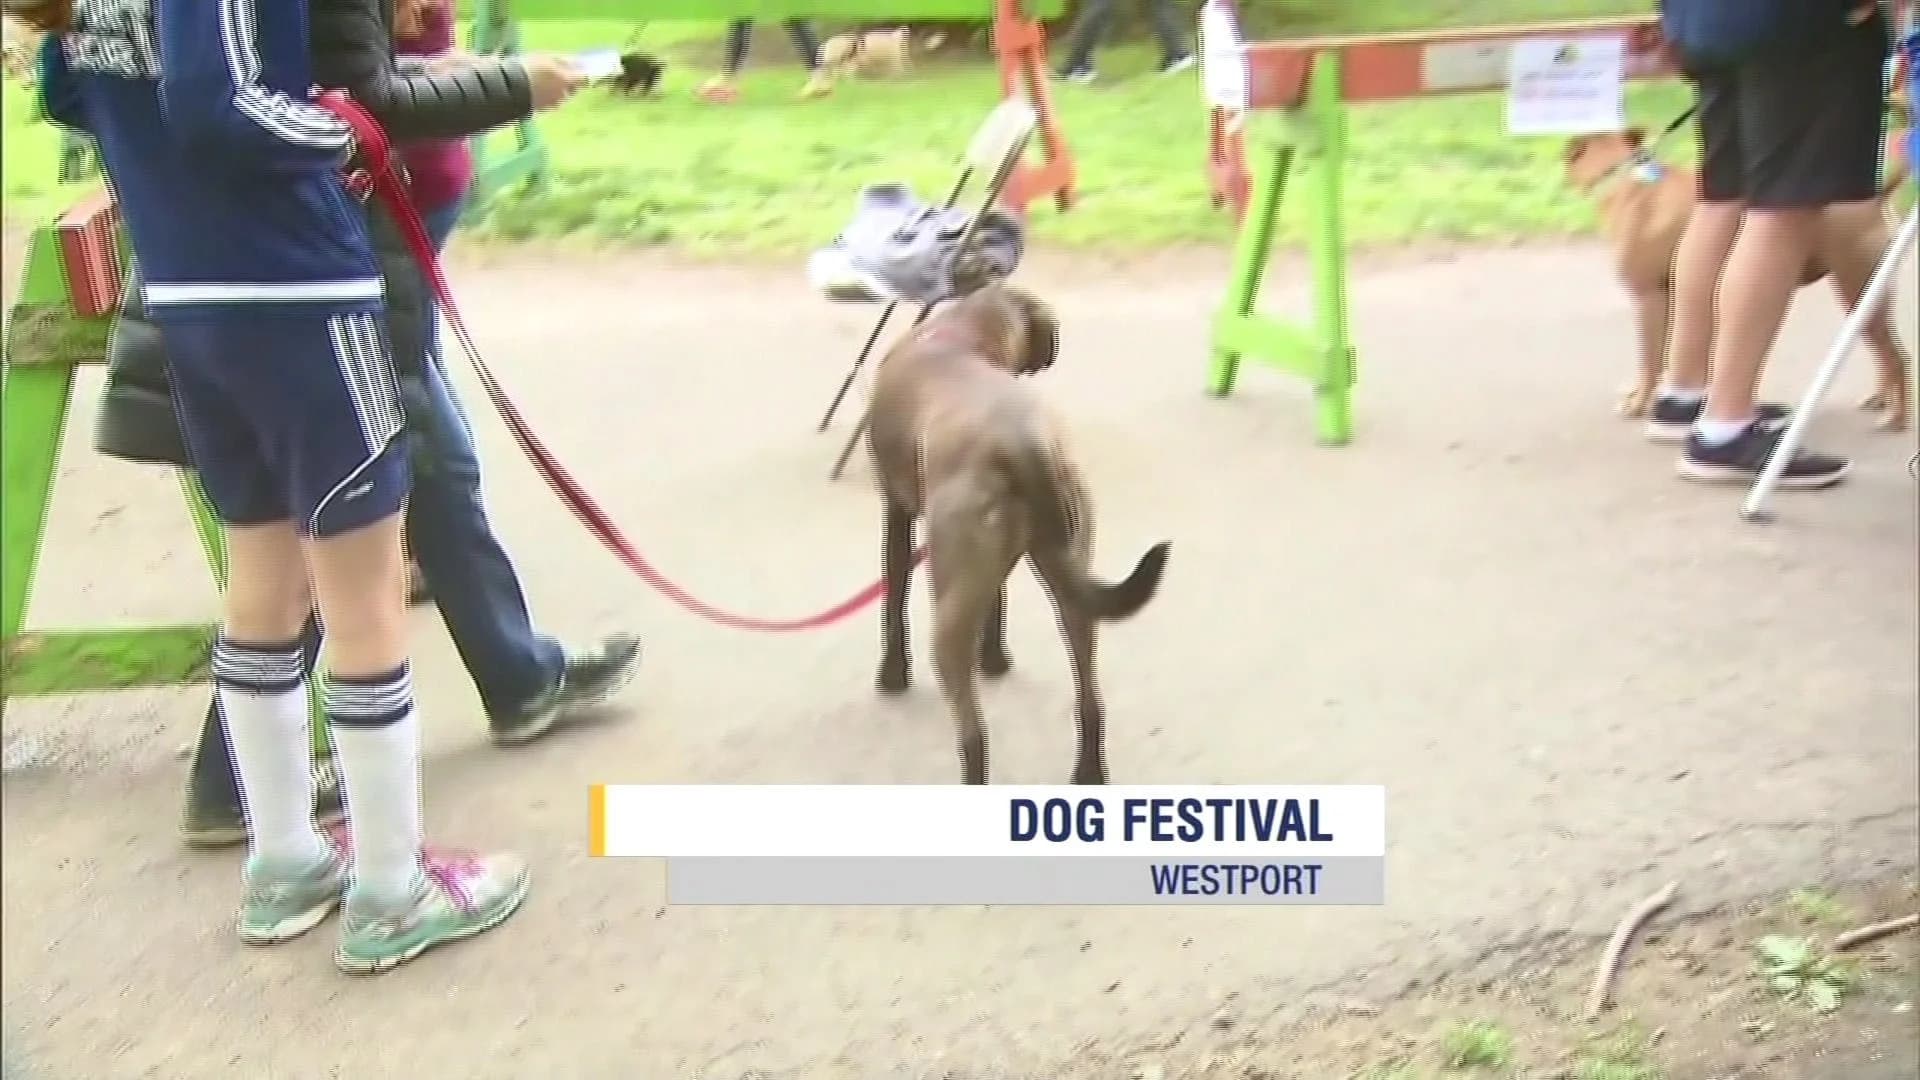 Westport Dog Festival held in Winslow Park